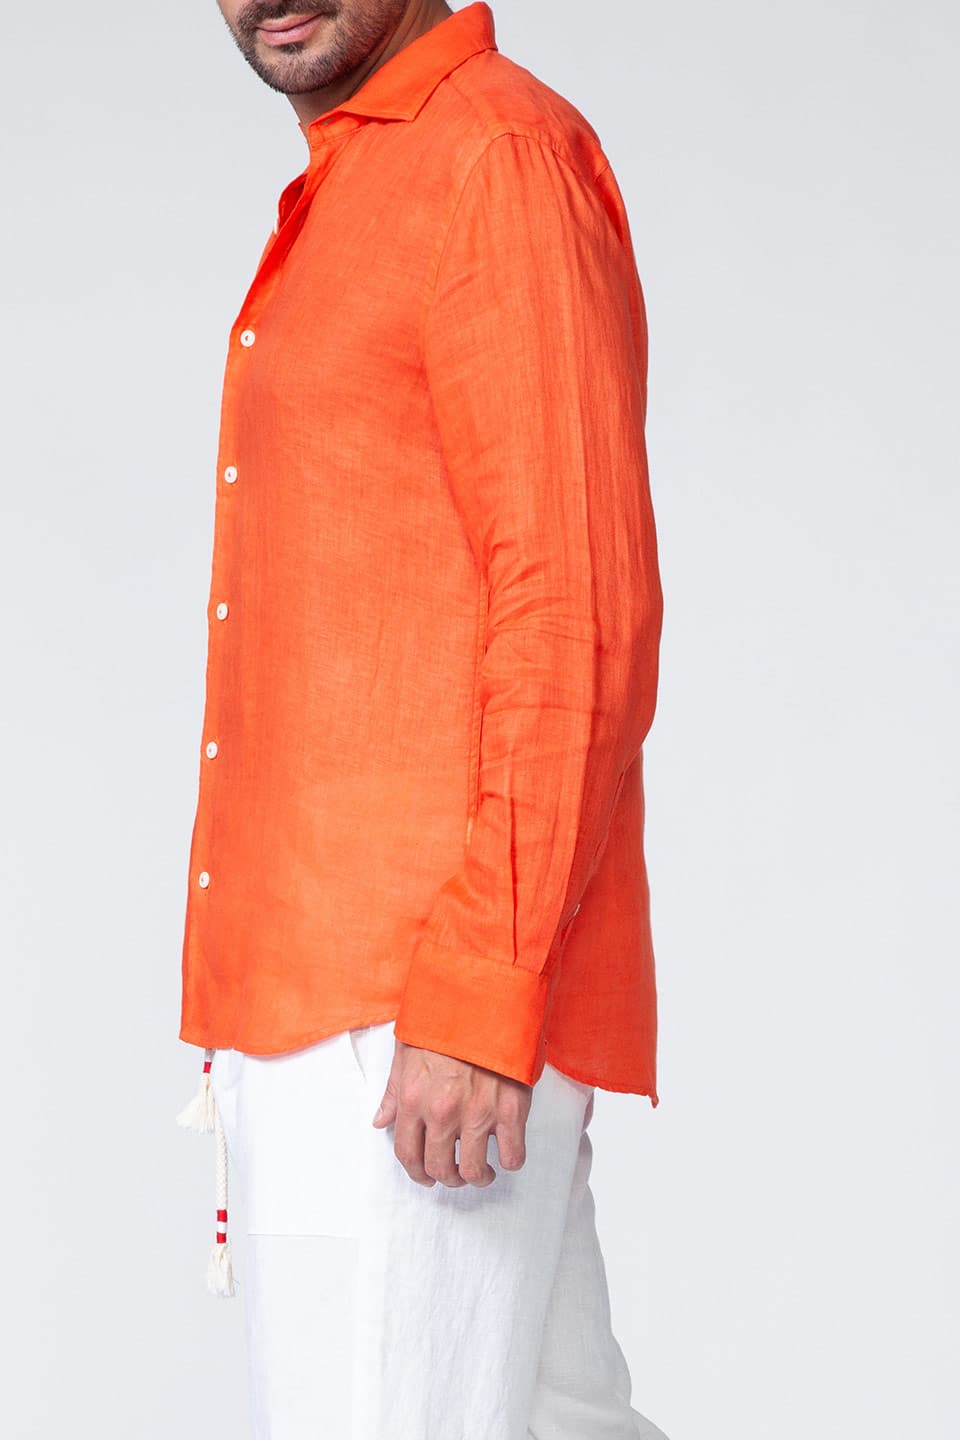 Thumbnail for Product gallery 5, MC saint barth male pamplona shirt orange side